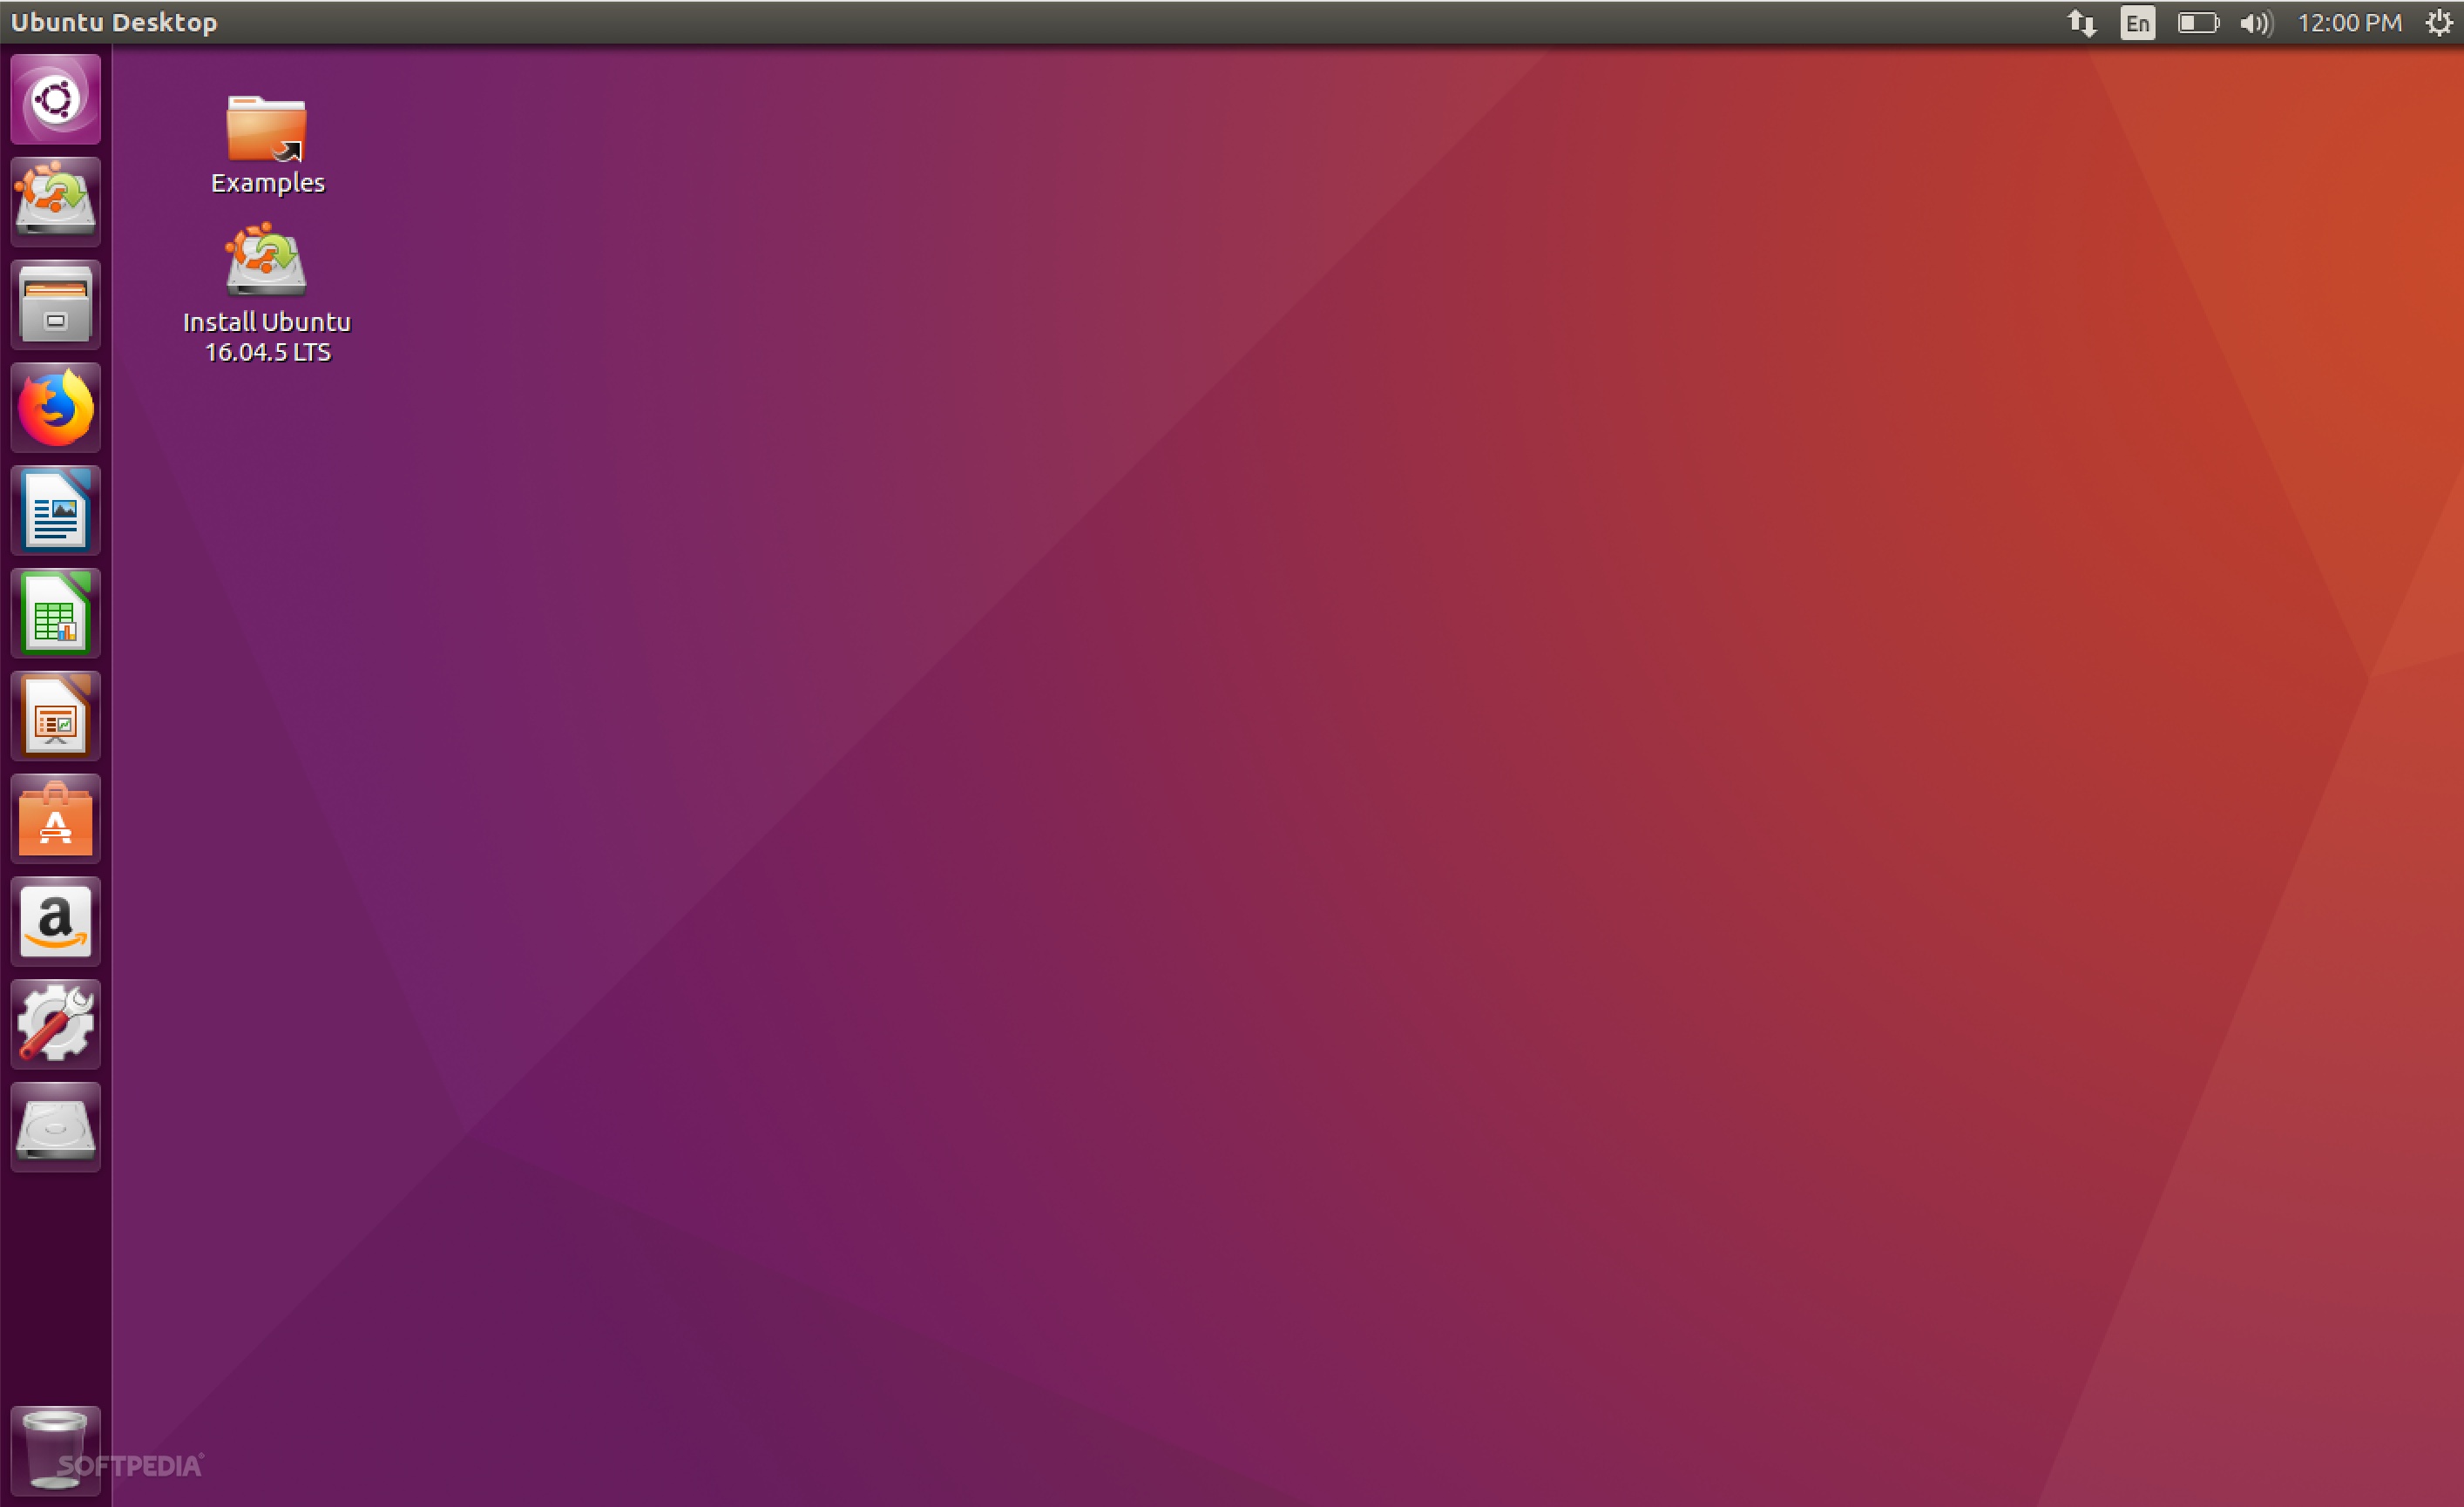 download ubuntu 14.04 now